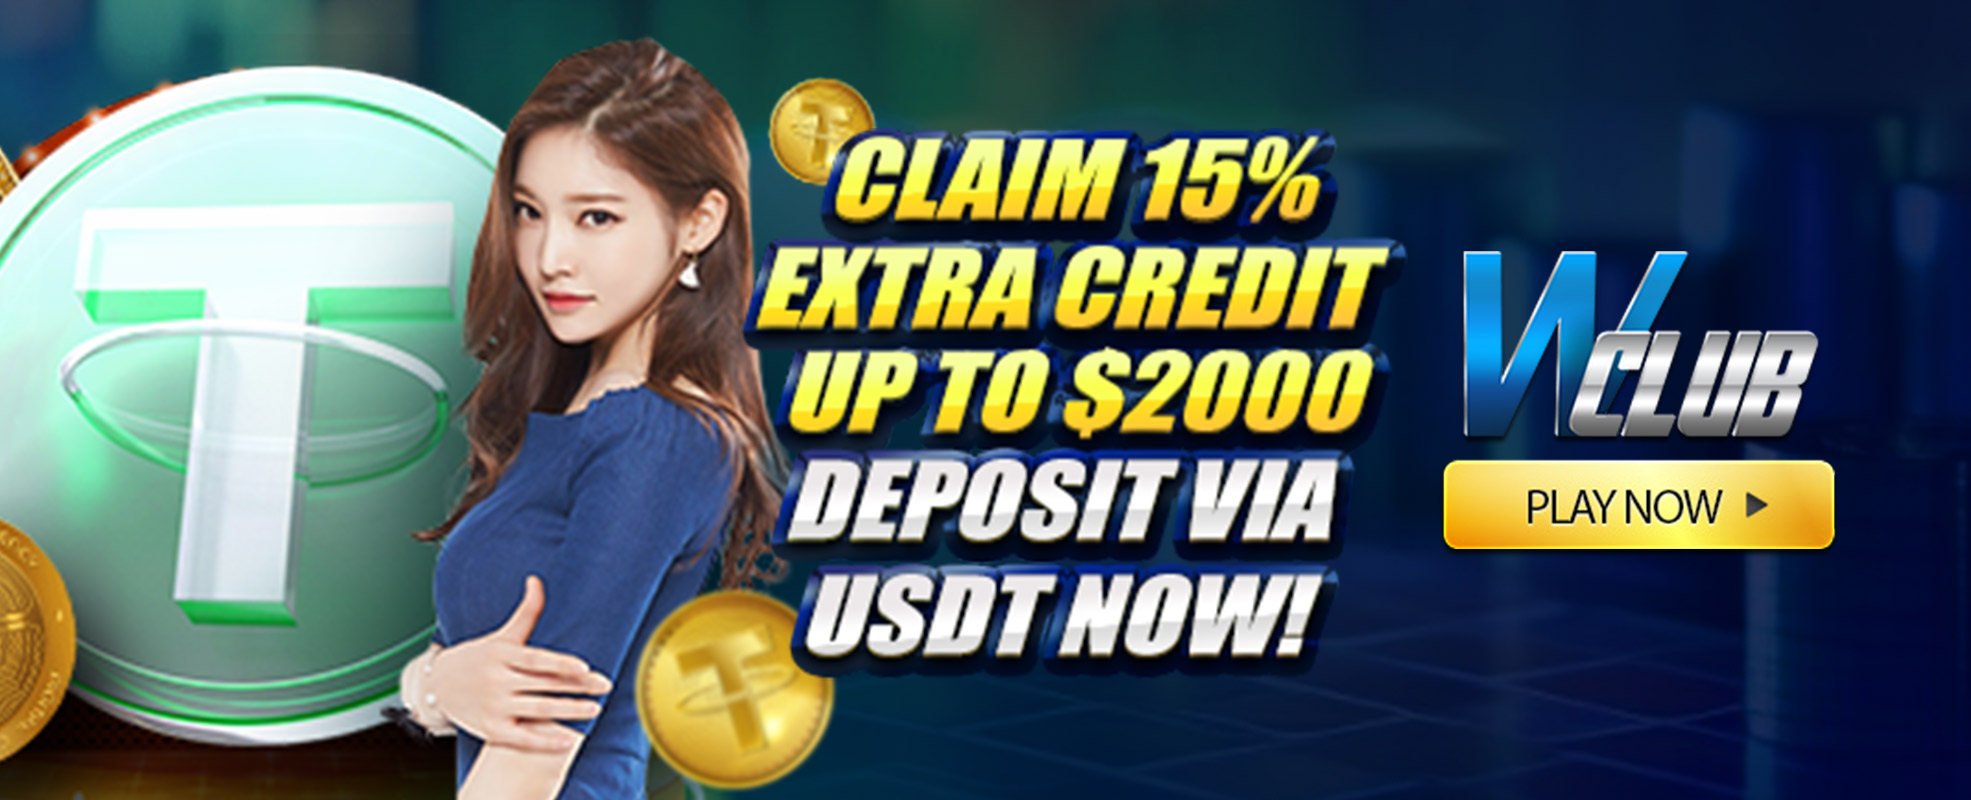 Claim 15% Extra Credit Up To $2000 Deposit Via USDT Now!